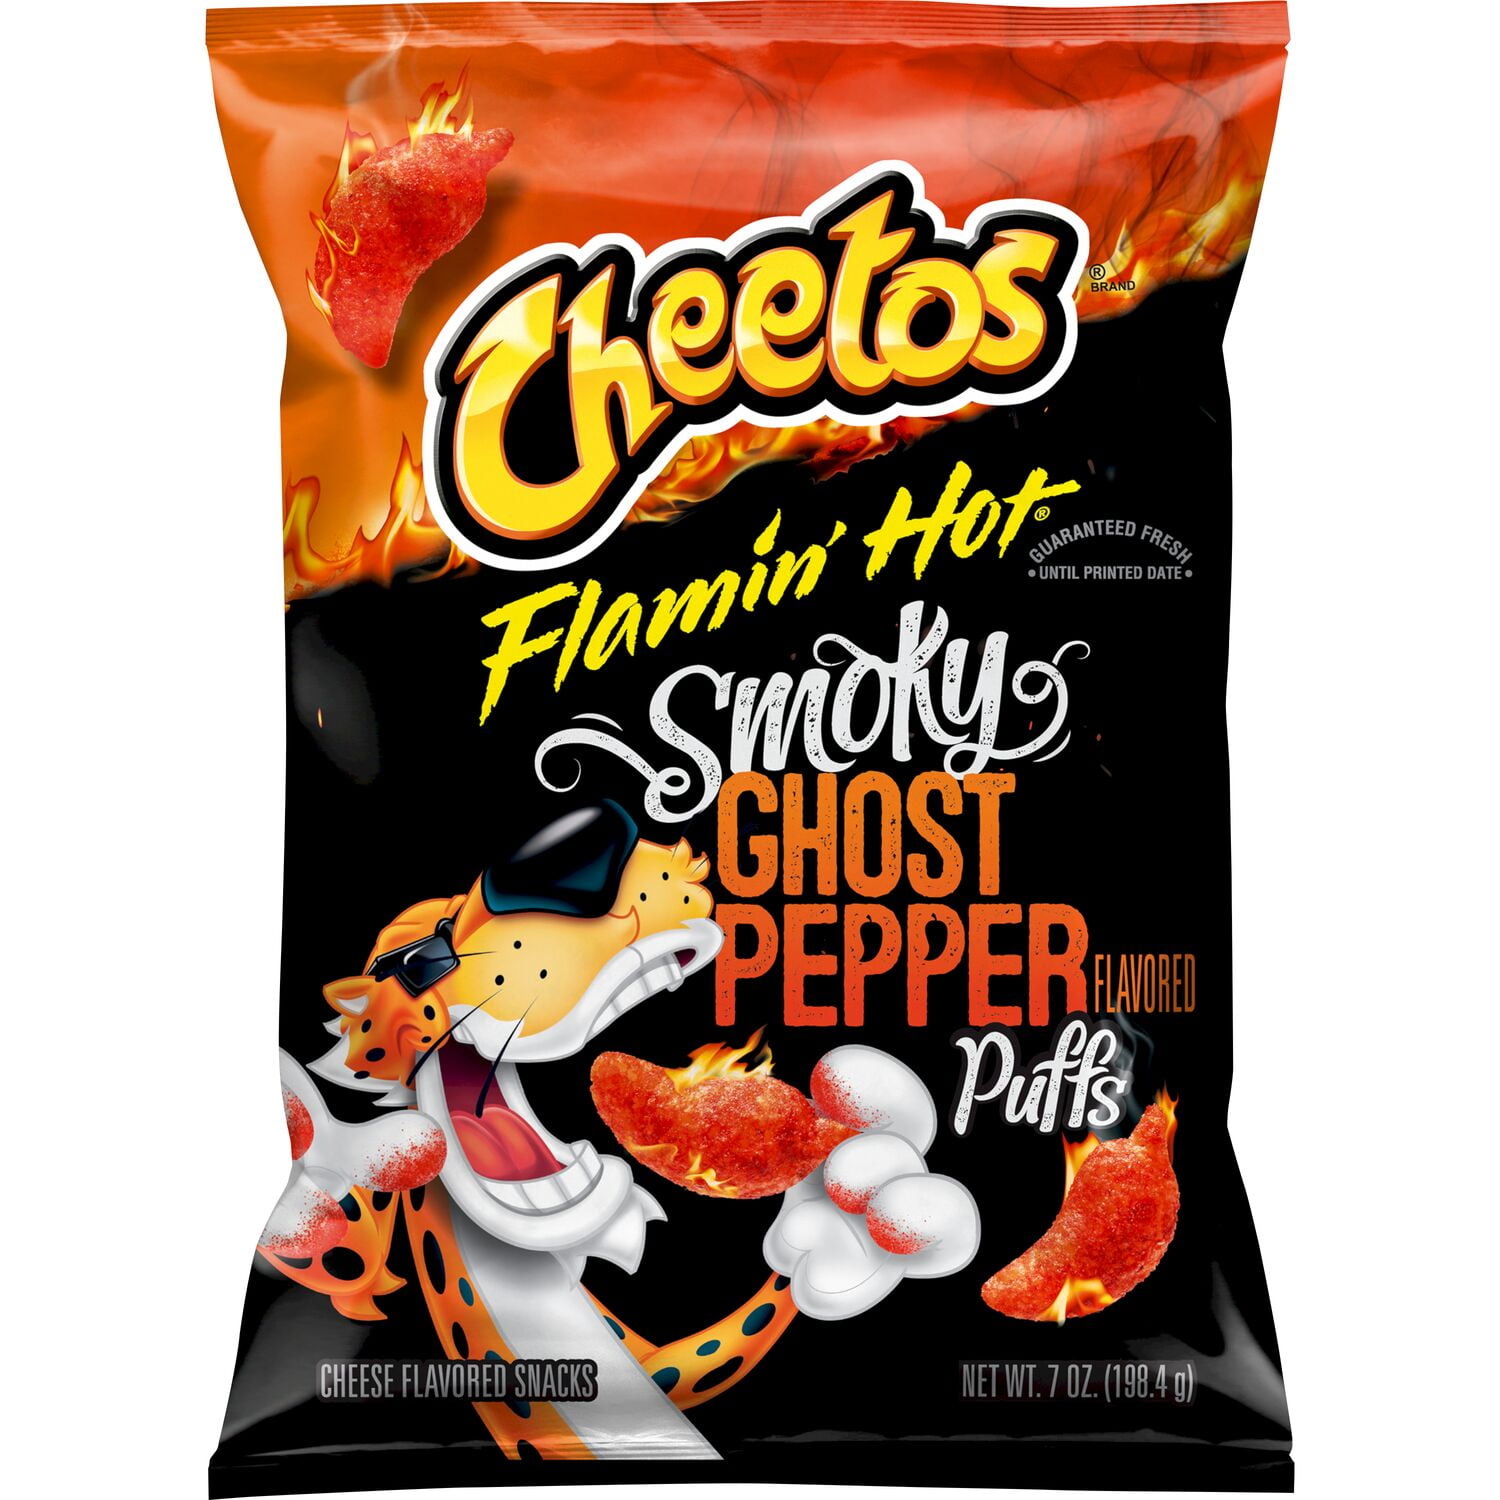 Cheetos Flamin' Hot Smoky Ghost Pepper Puffs